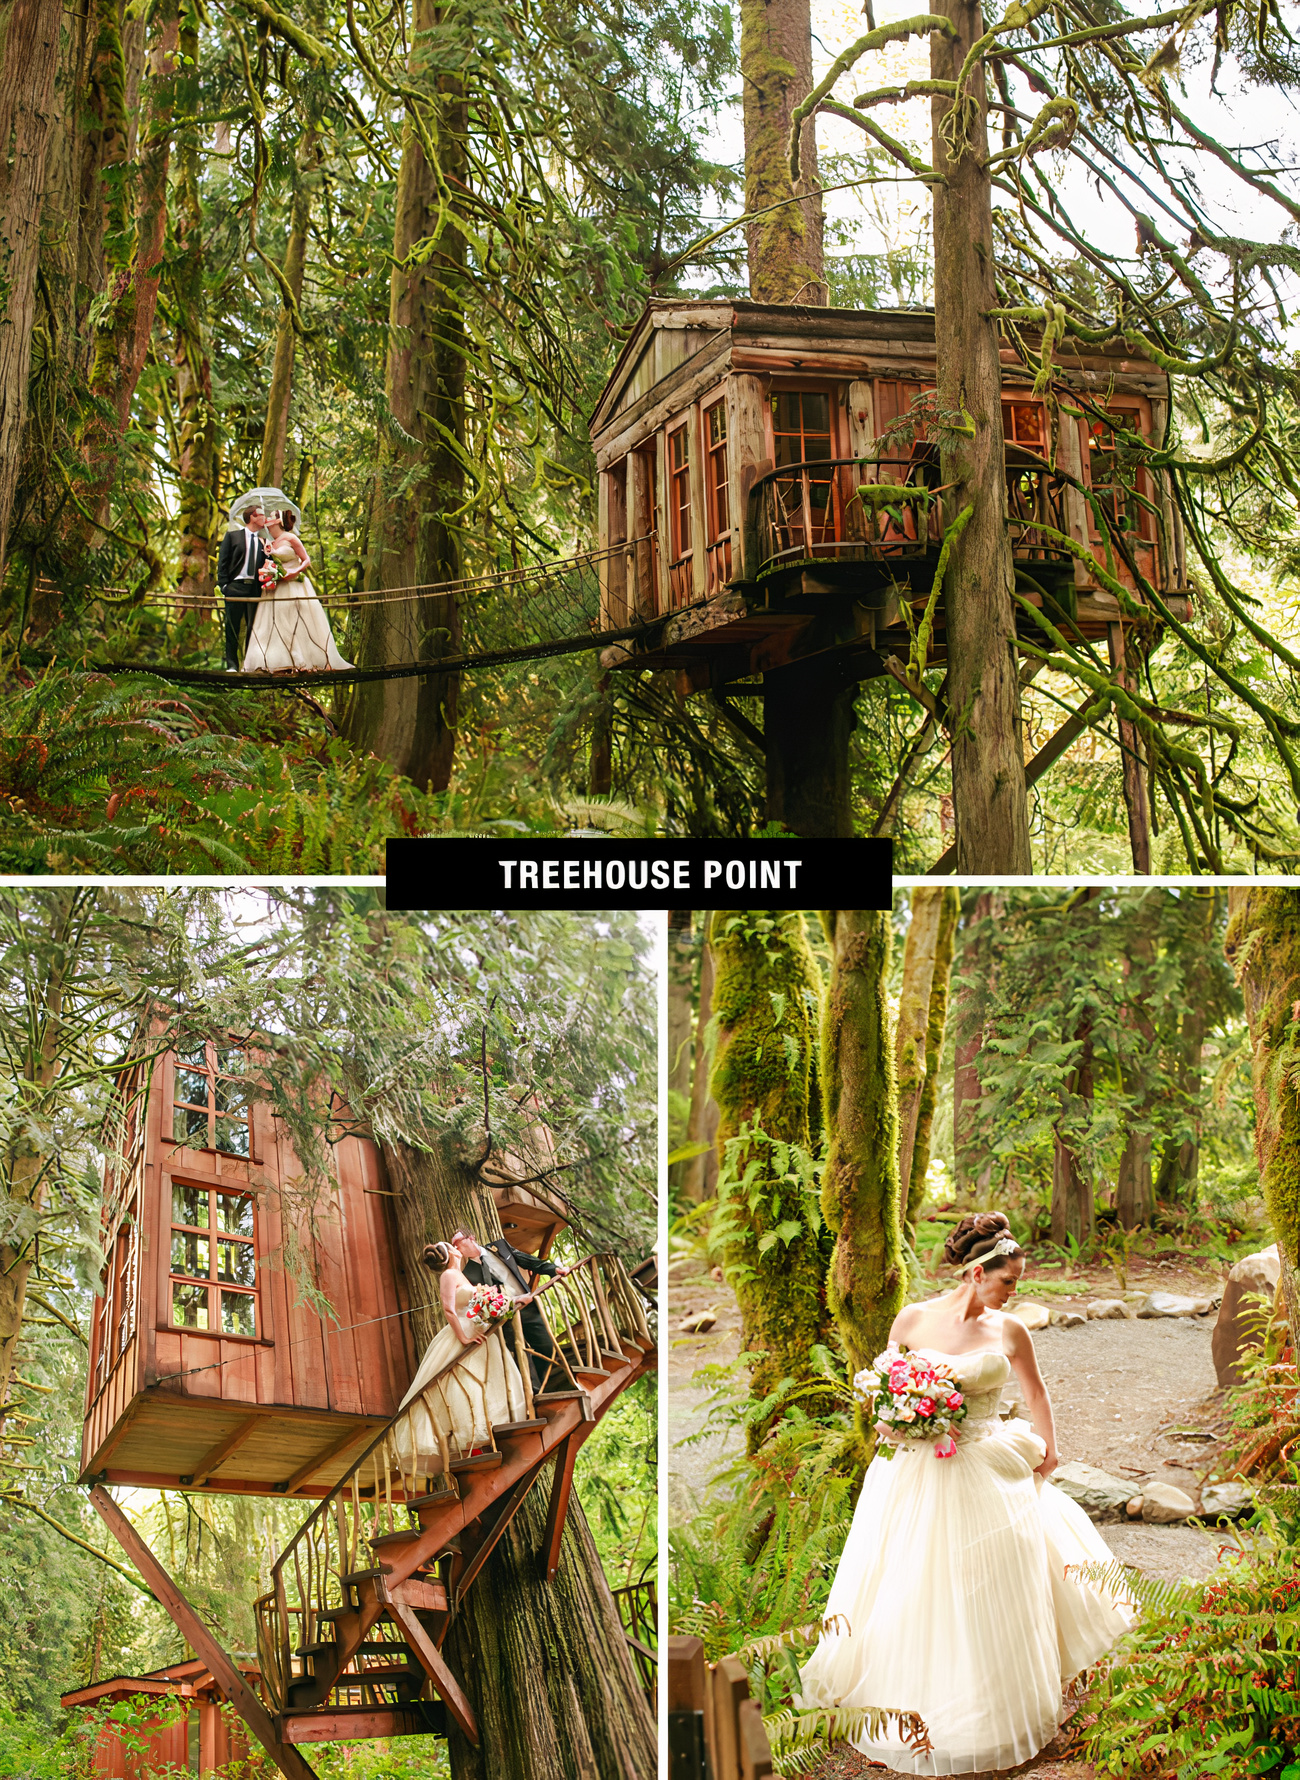 Treehouse Point wedding venue in Washington